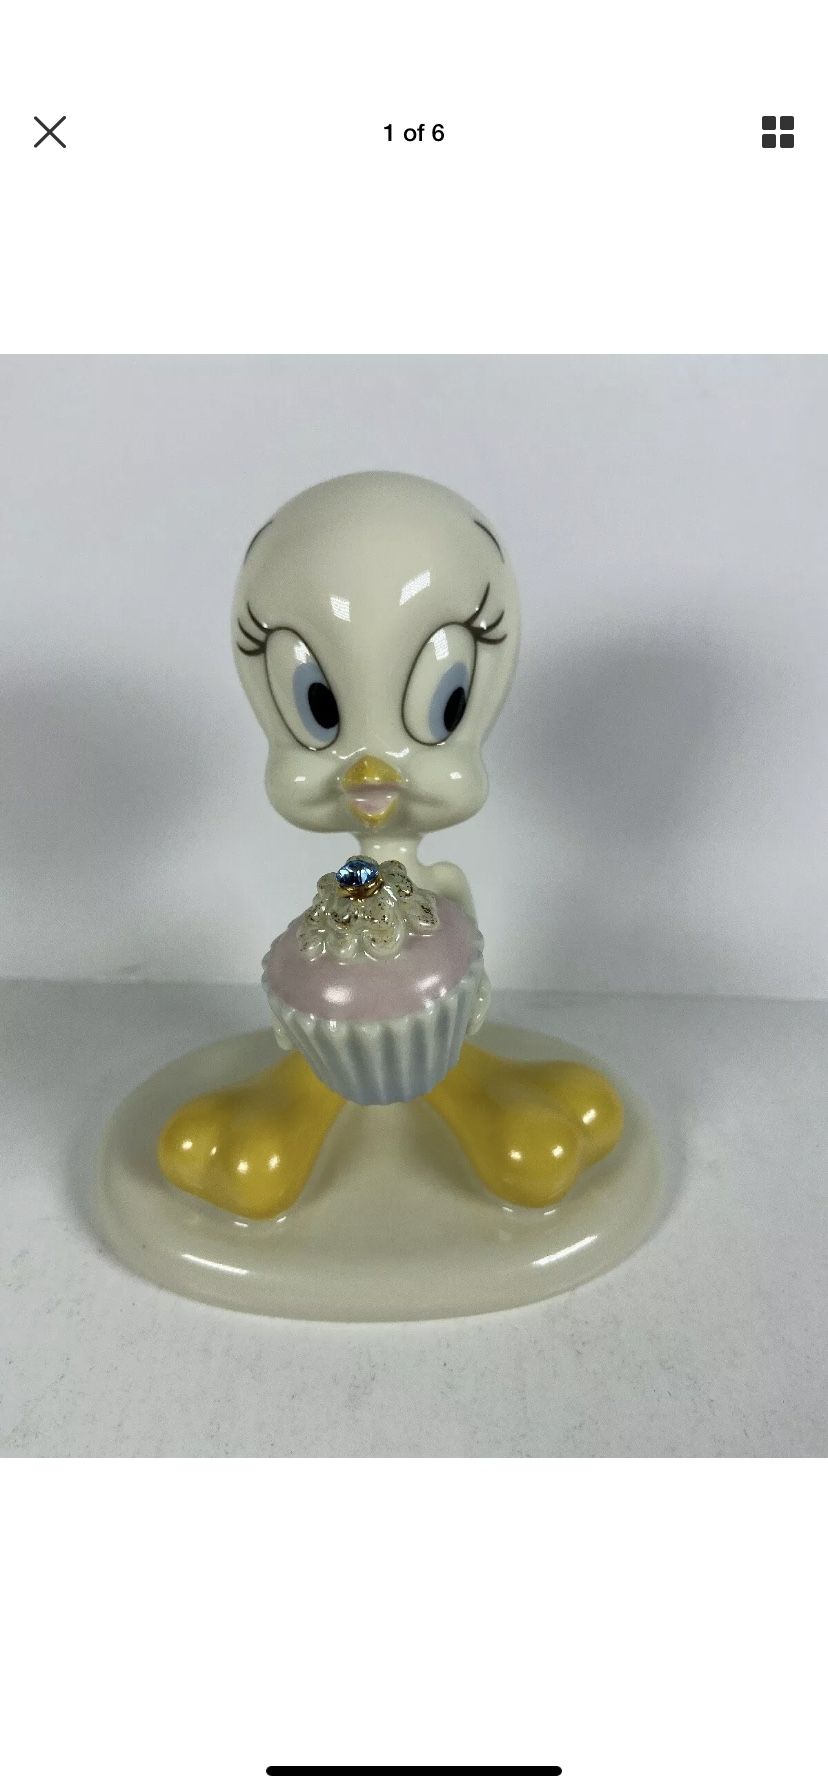 Lenox tweety bird with cupcake glass figure